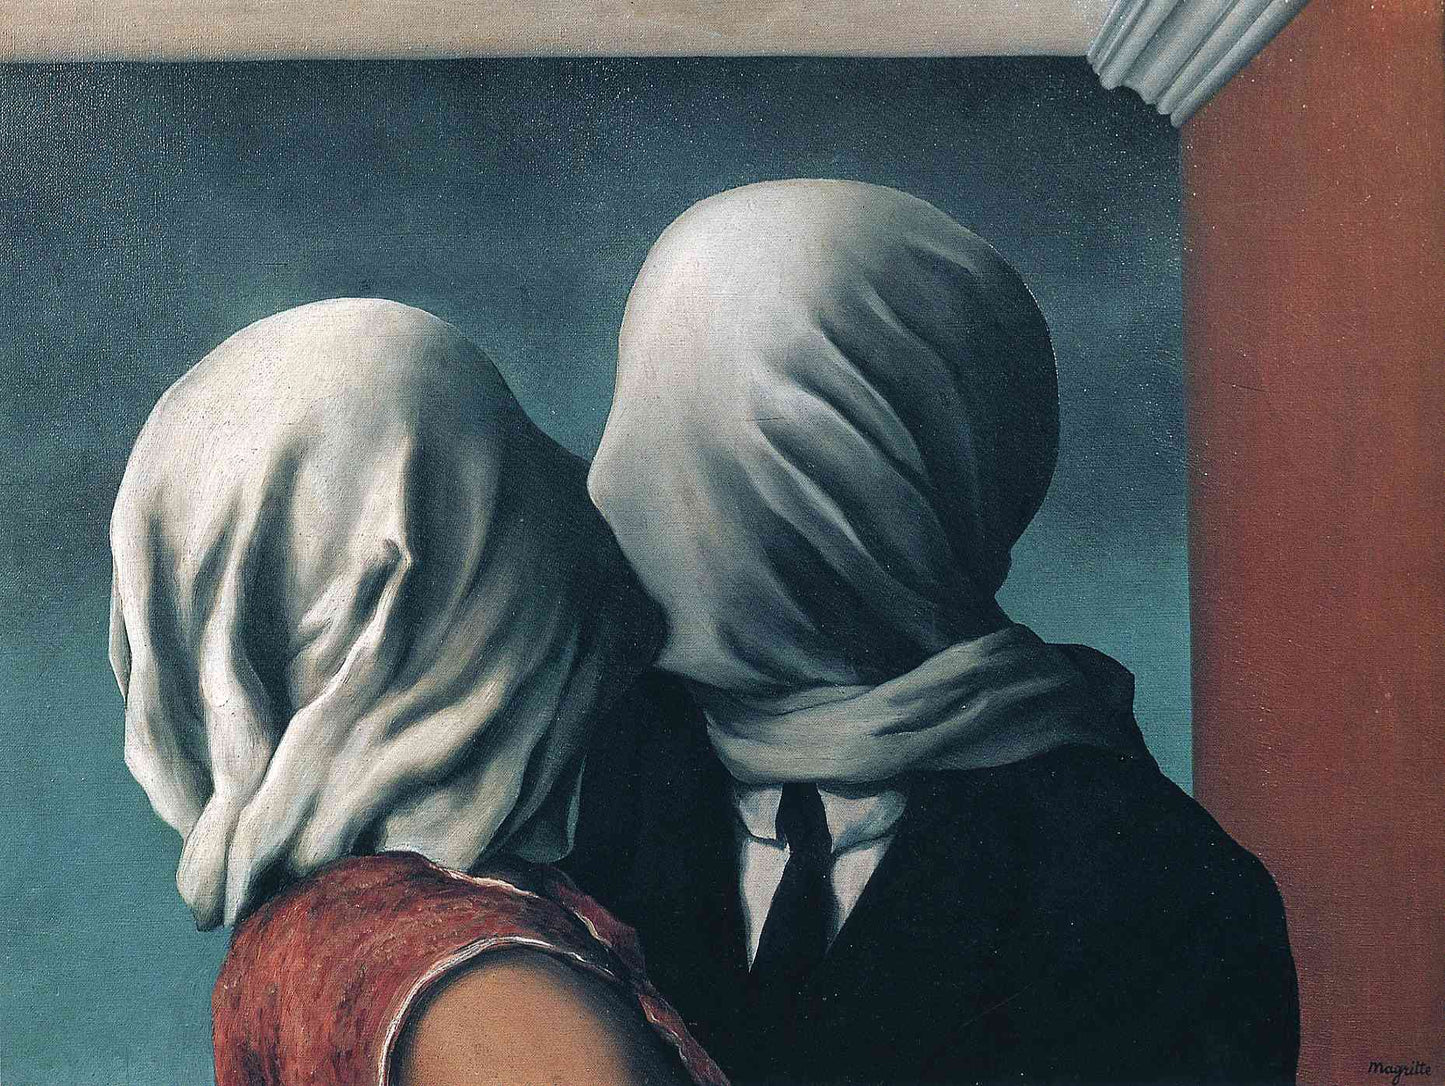 Los amantes - René Magritte - Kit de pintura diamante